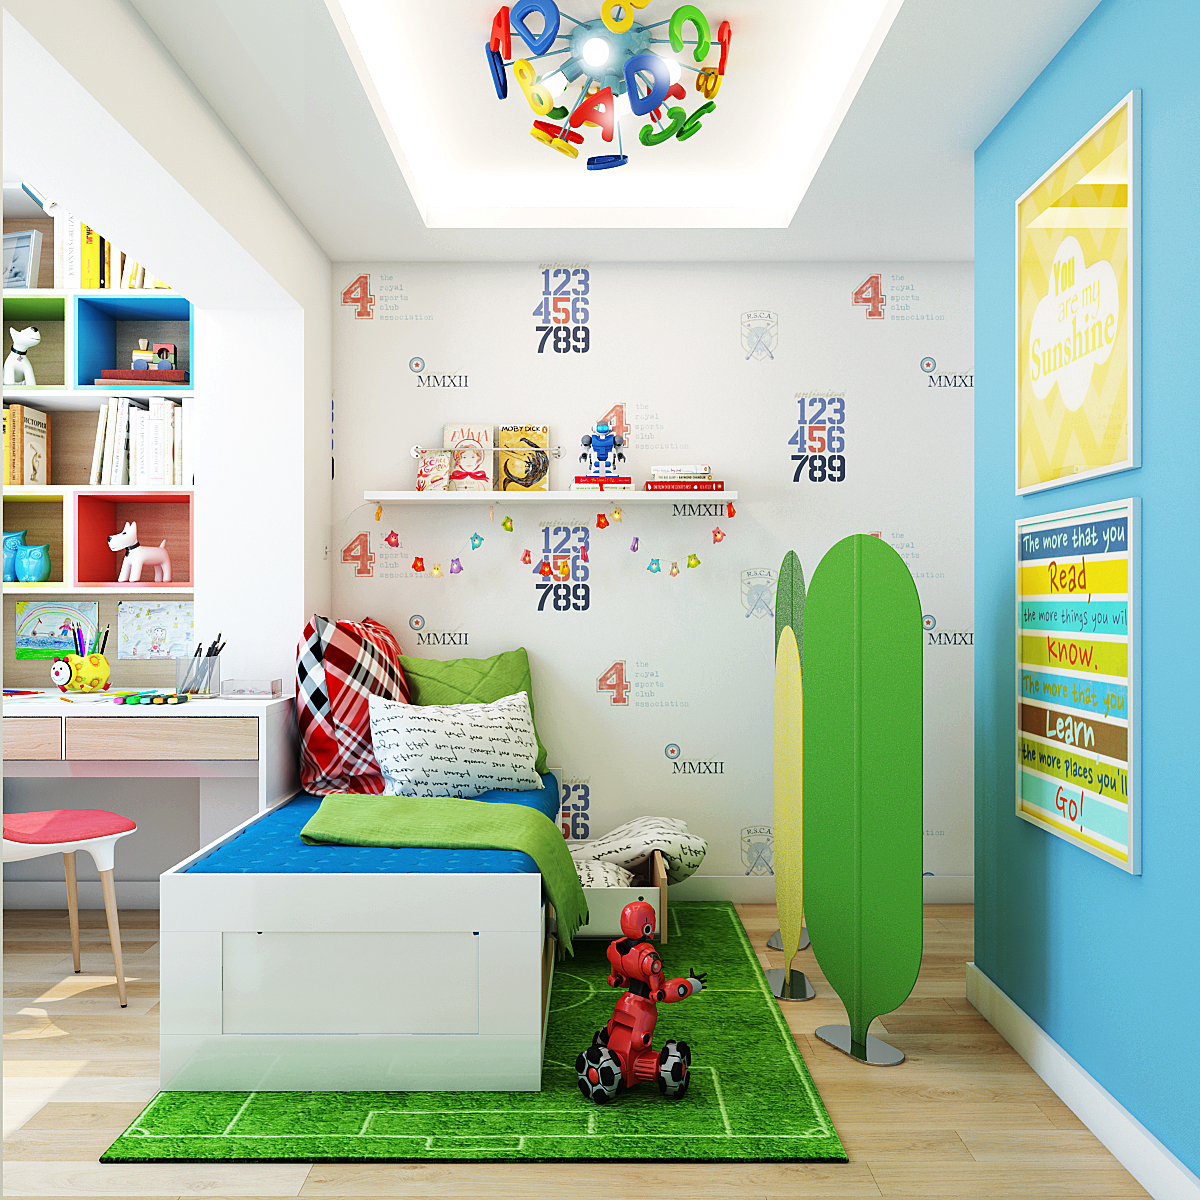 happy kids room design "width =" 1200 "height =" 1200 "srcset =" https://mileray.com/wp-content/uploads/2020/05/1588509049_334_Creative-and-Innovative-Way-To-Decor-Kids-Room-Designs-Which.jpg 1200w, https://mileray.com / wp-content / uploads / 2016/10 / Евгения-Анфилова1-150x150.jpg 150w, https://mileray.com/wp-content/uploads/2016/10/Евгения-Анфилова1-300x300.jpg: /mileray.com/ wp-content / uploads / 2016/10 / Евгения-Анфилова1-768x768.jpg 768w, https://mileray.com/wp-content/uploads/2016/10/Евгения-Анфилова1-1024x104, https://mileray.com /wp-content/uploads/2016/10/Евгения-Анфилова1-696x696.jpg 696w, https://mileray.com/wp-content/uploads/2016/10/Евгения-Анфилов1- 1068x1068.jpg 1068w, https: / /mileray.com/wp-content/uploads/2016/10/Евгения-Анфилова1-420x420.jpg 420w "Sizes =" (maximum width: 1200px) 100vw, 1200px